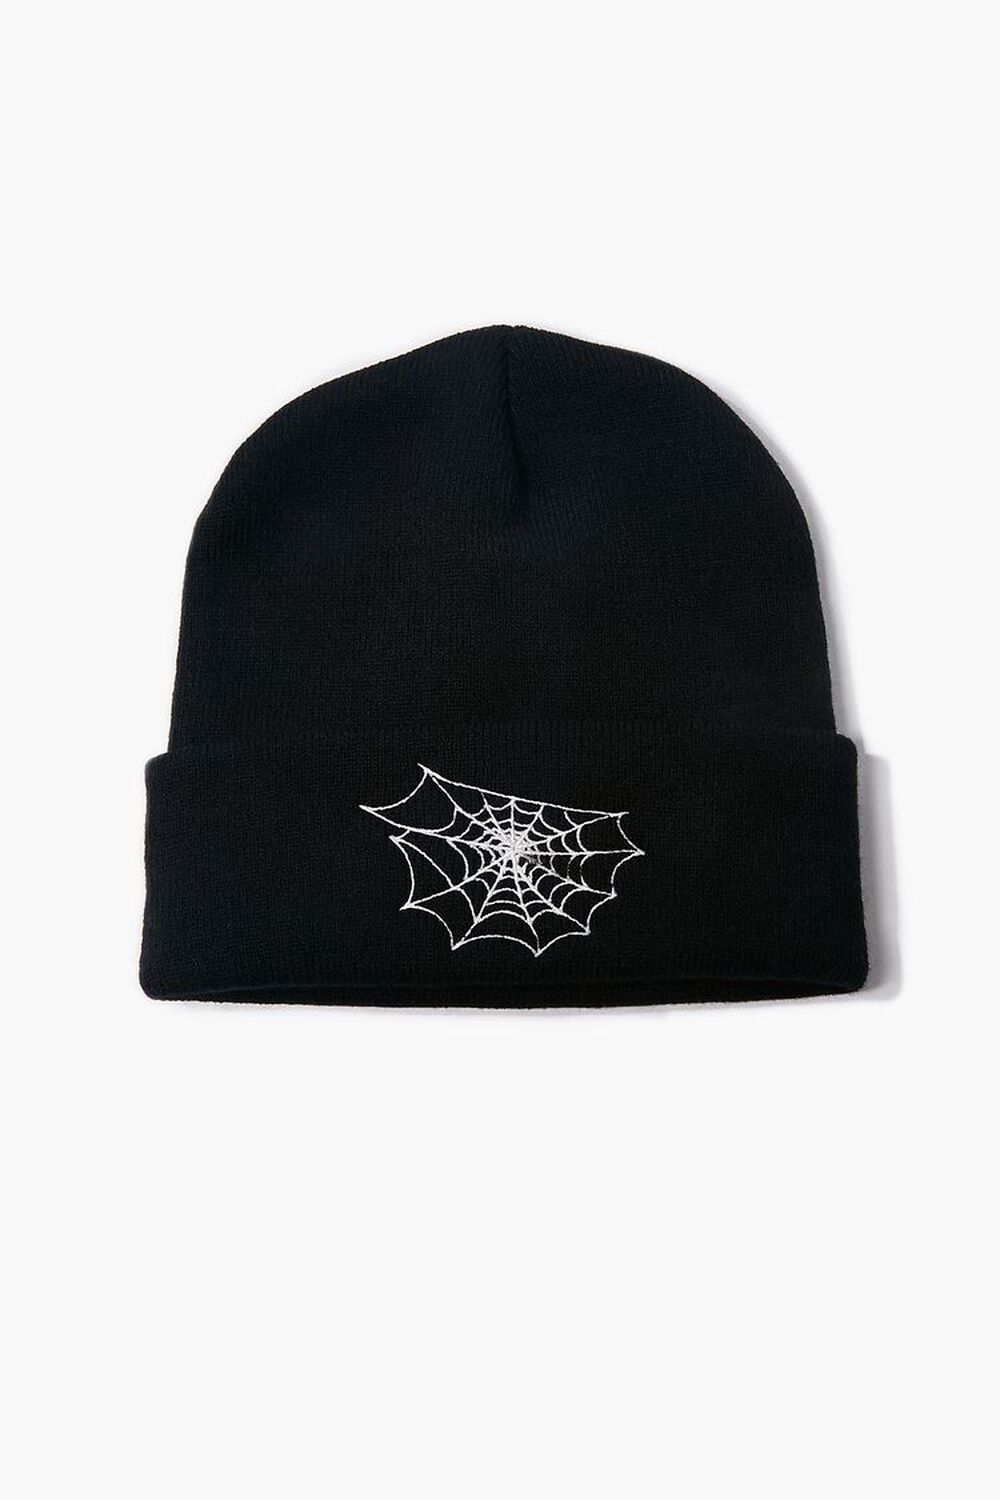 BLACK/WHITE Men Embroidered Spiderweb Beanie, image 1